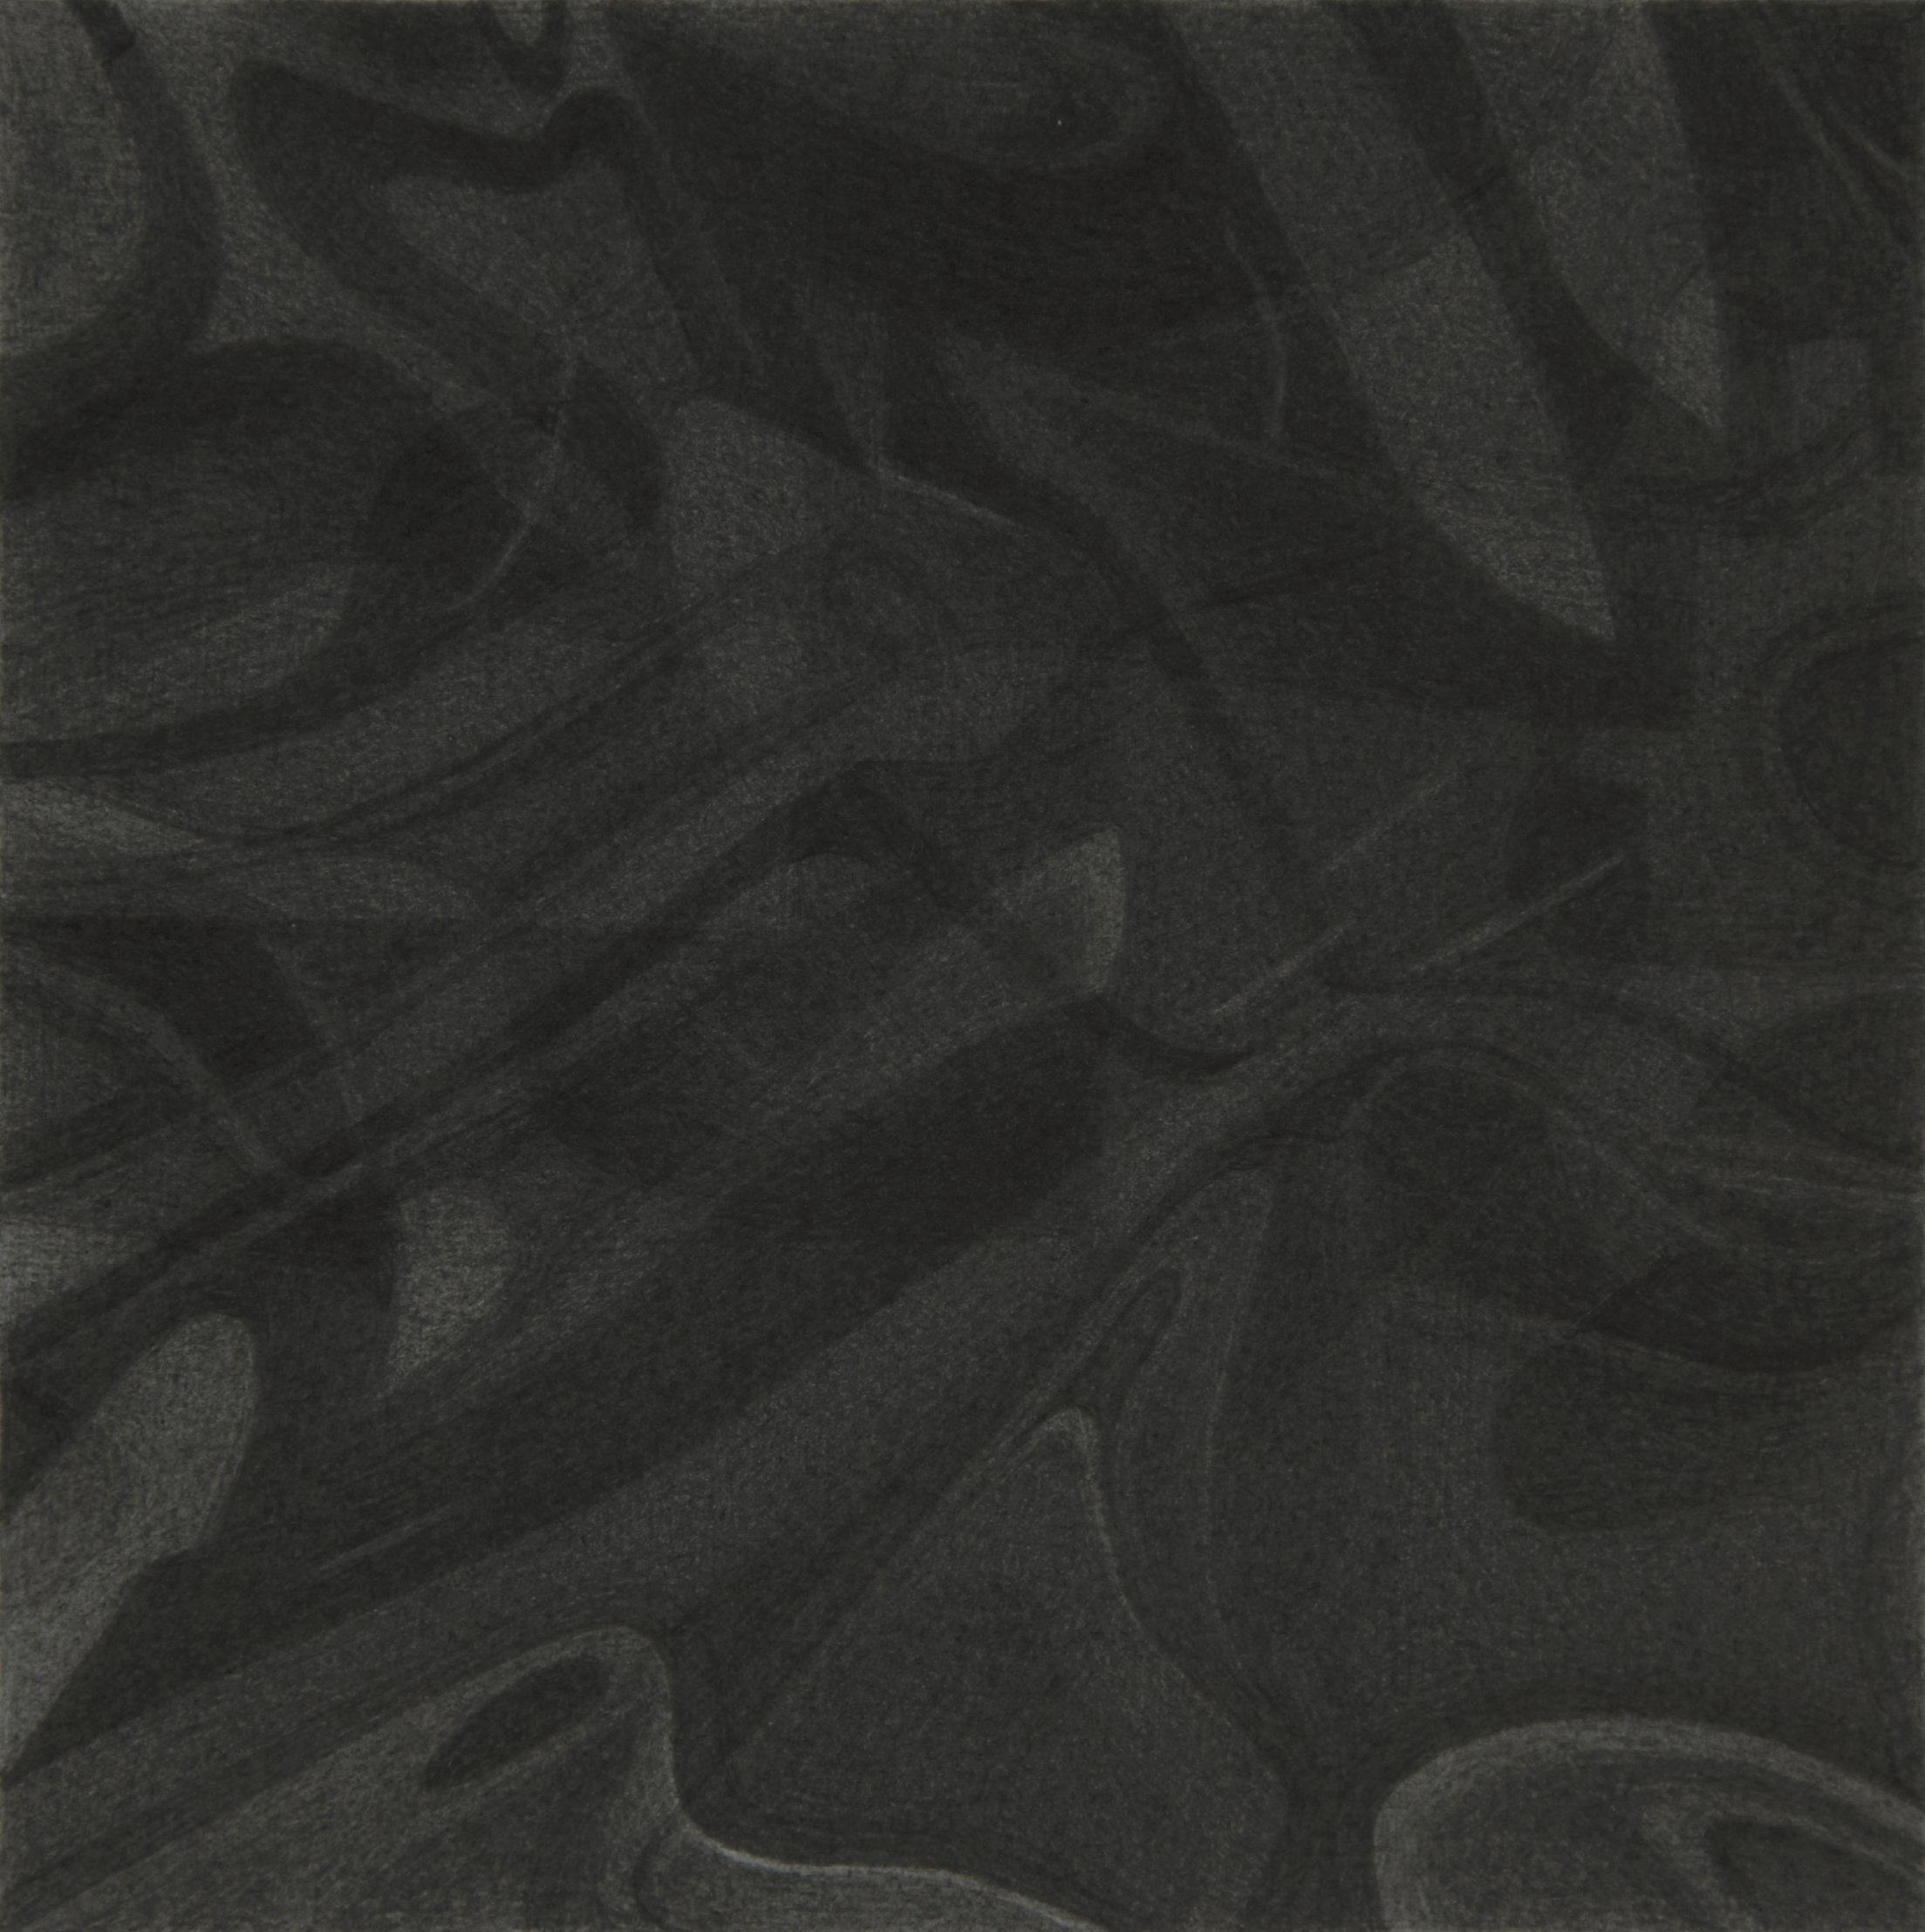  Portal 2  6x6”, graphite on paper, 2012   